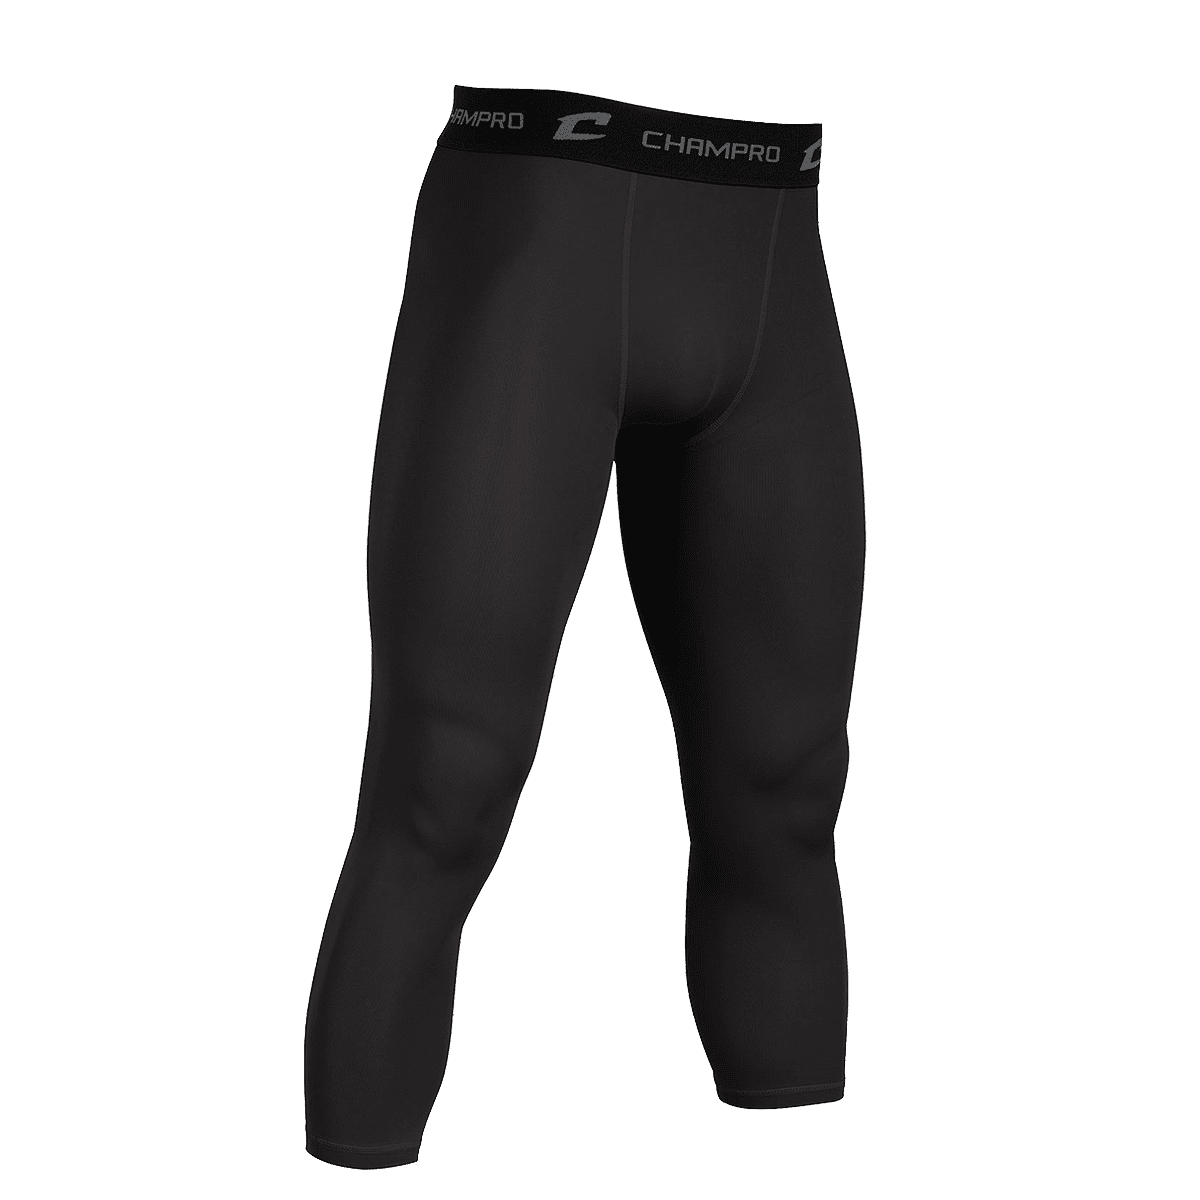 Champro 3/4 Length Adult Compression Pant - Black 